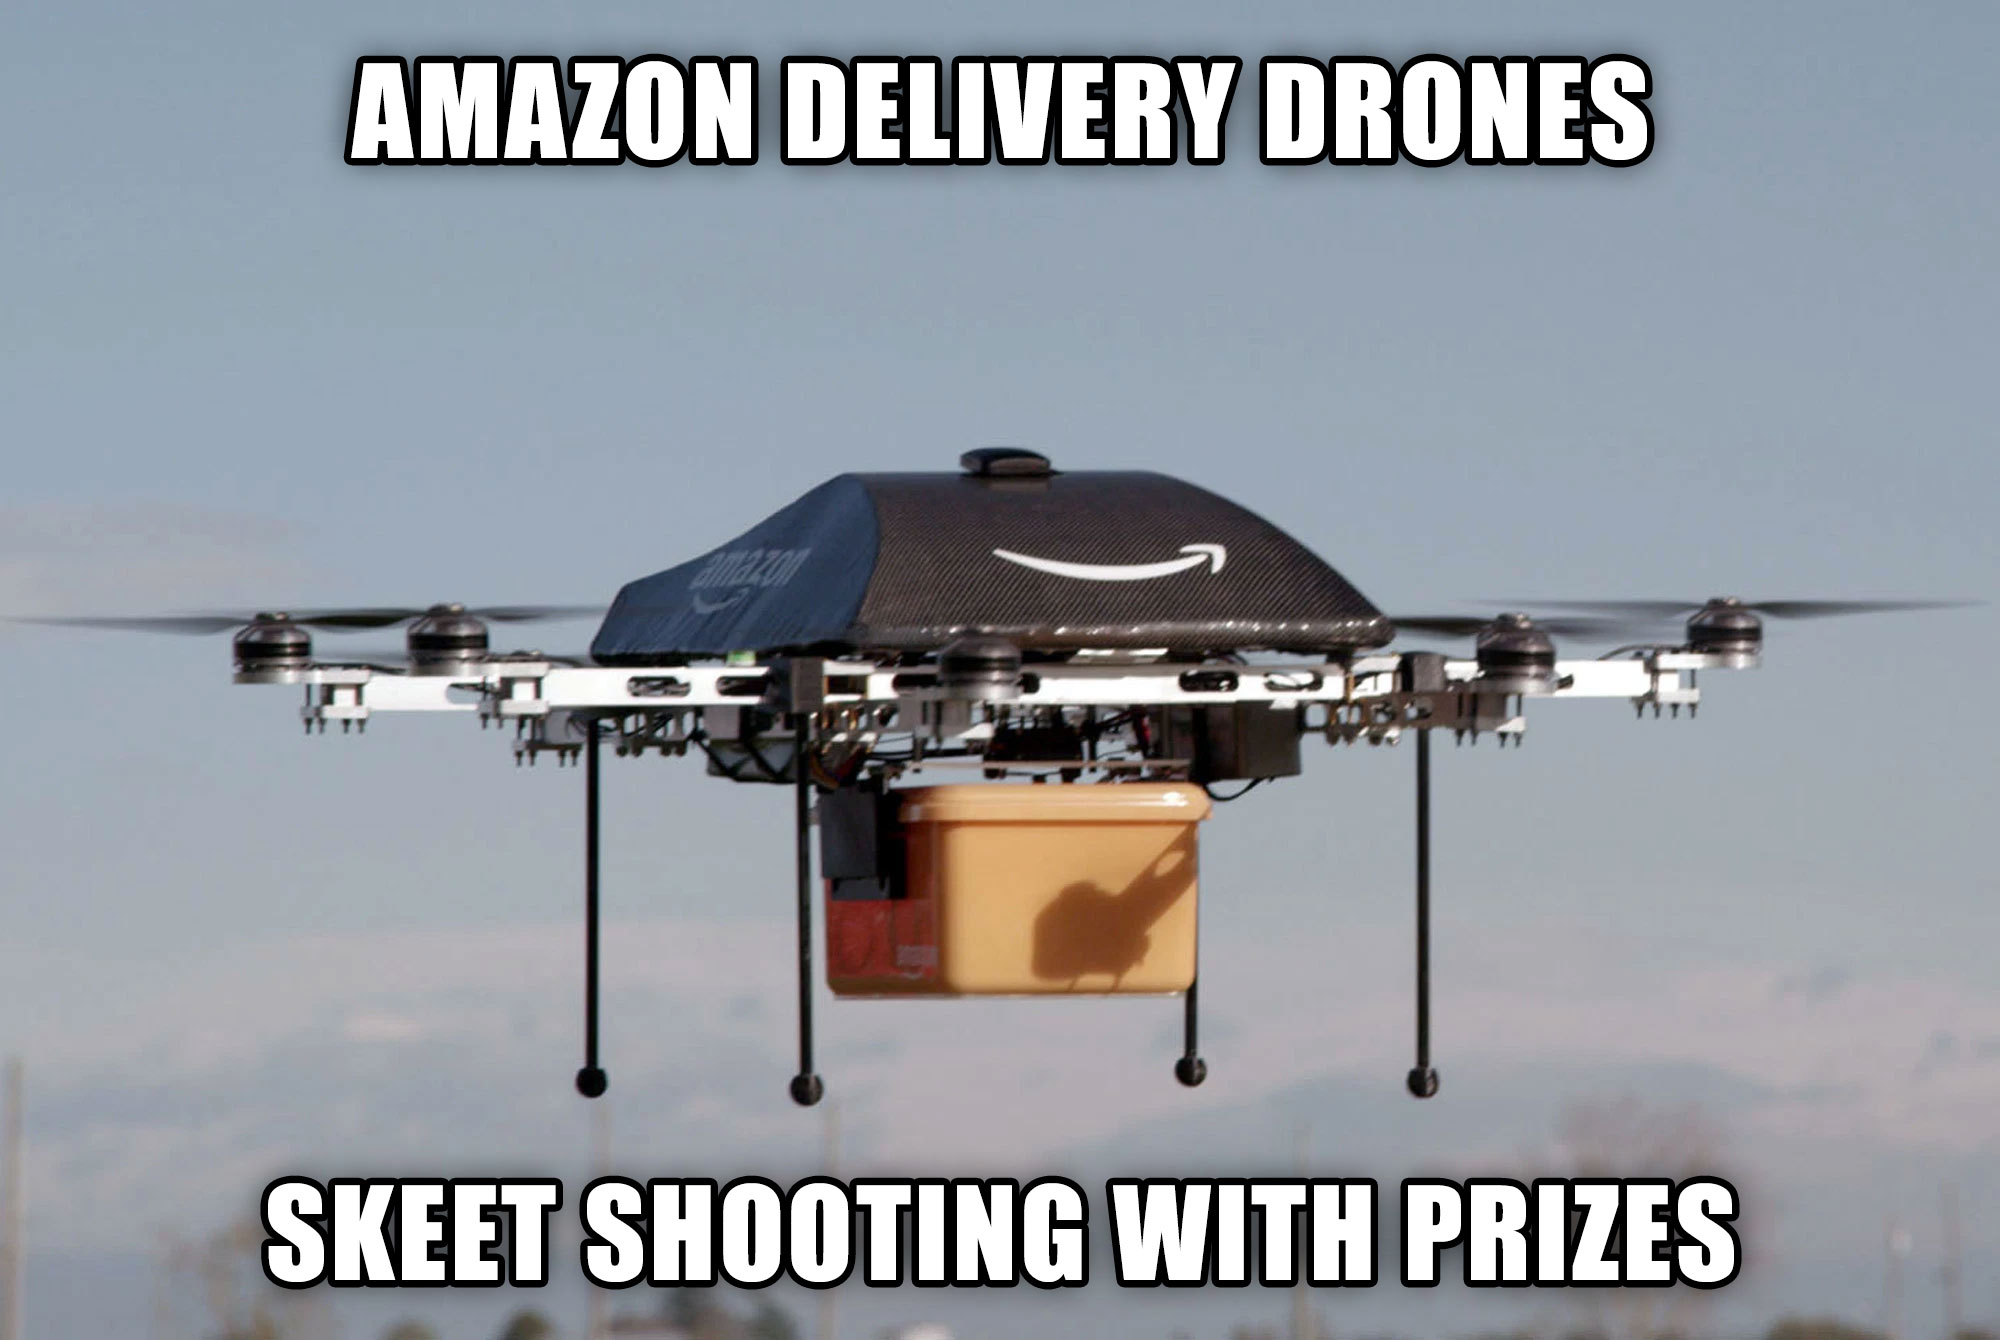 amazon drones uk - Amazon Delivery Drones Skeet Shooting With Prizes